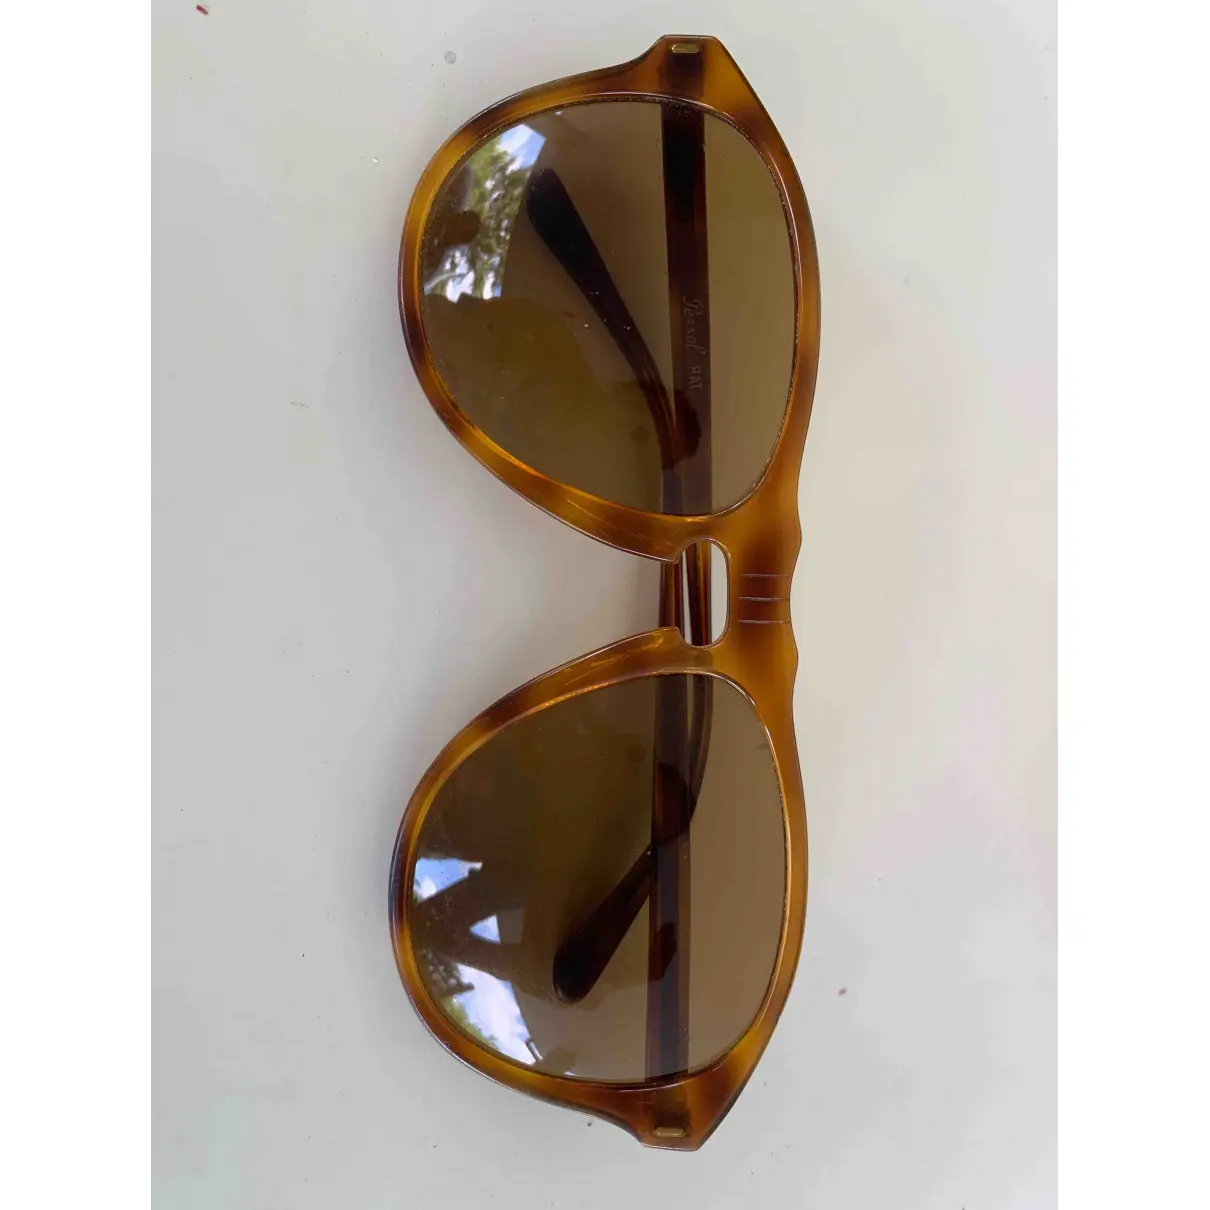 Sunglasses Persol - Vintage